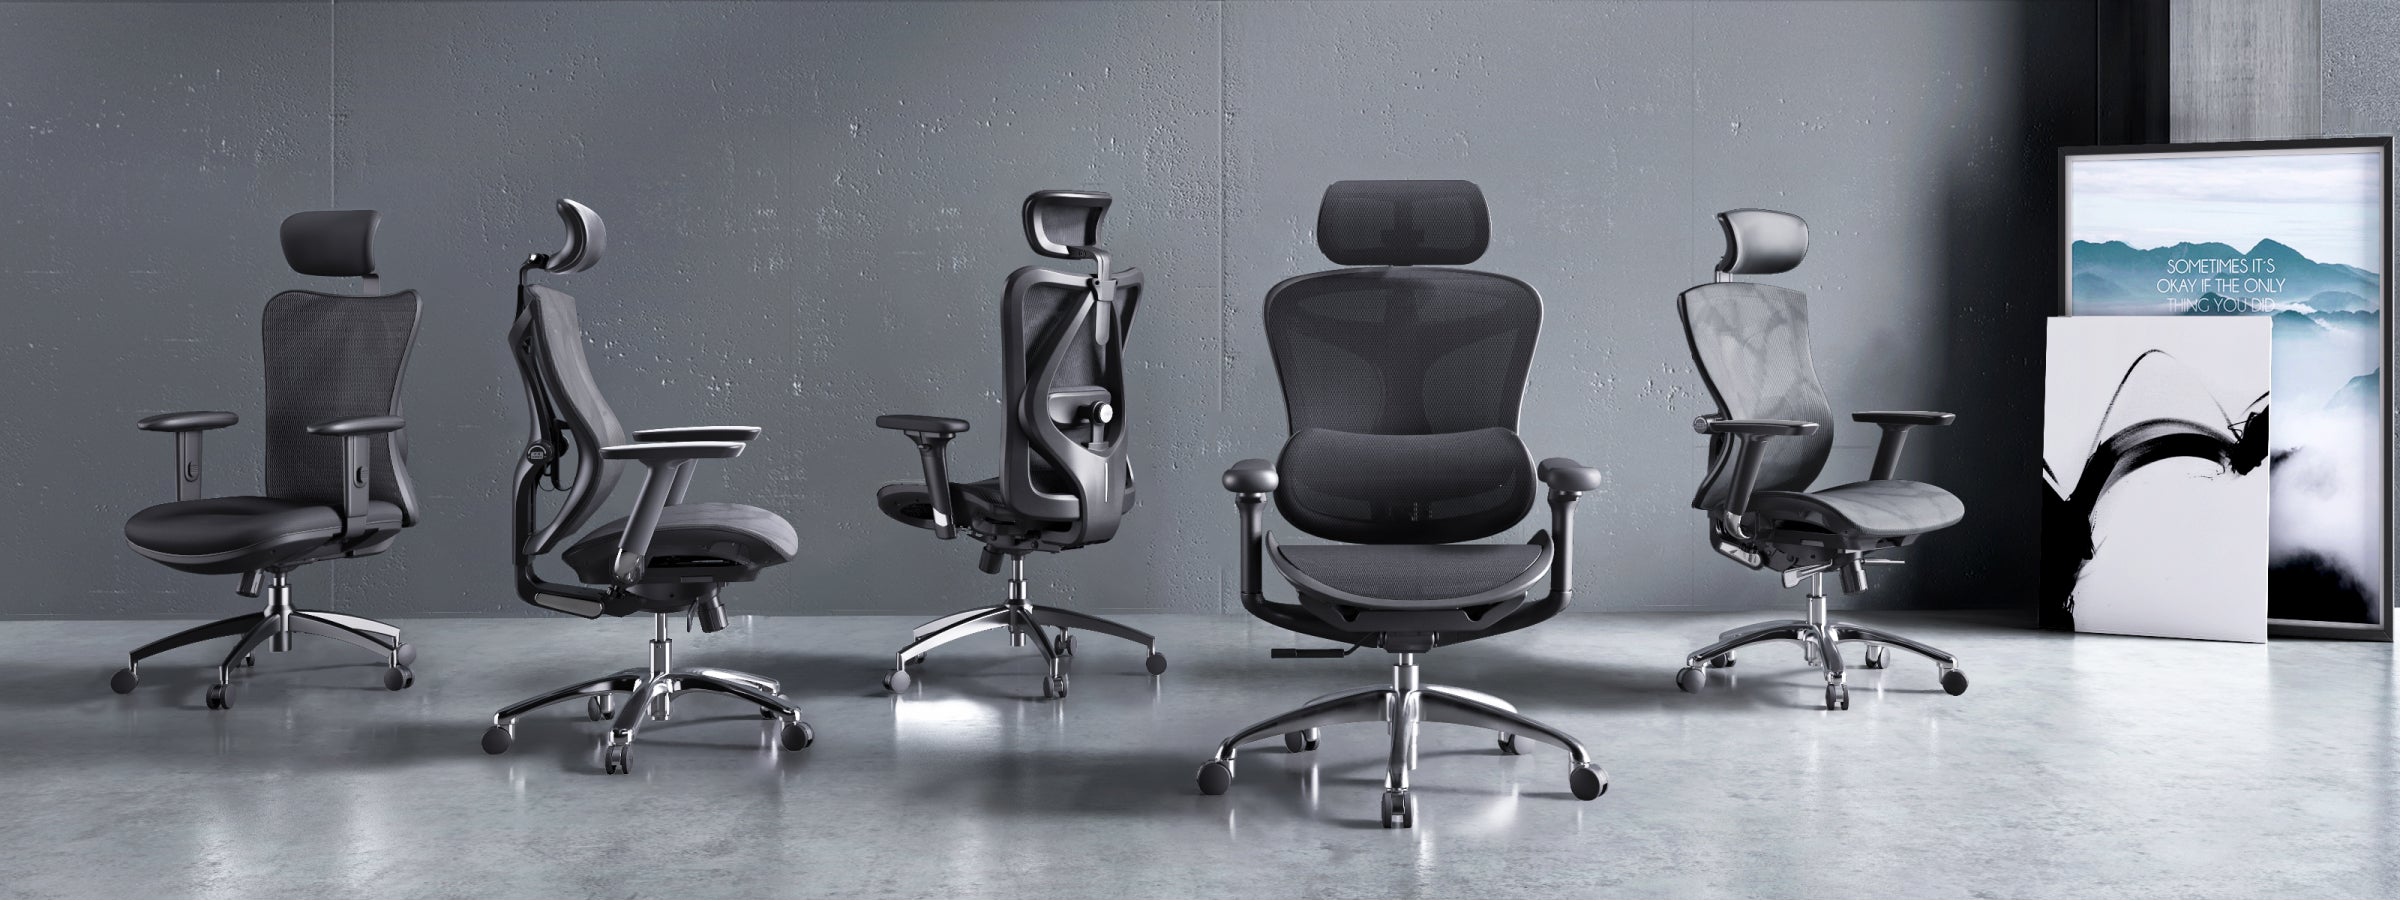 Sihoo M57 Full Mesh Breathable Office Chair for Sedentary